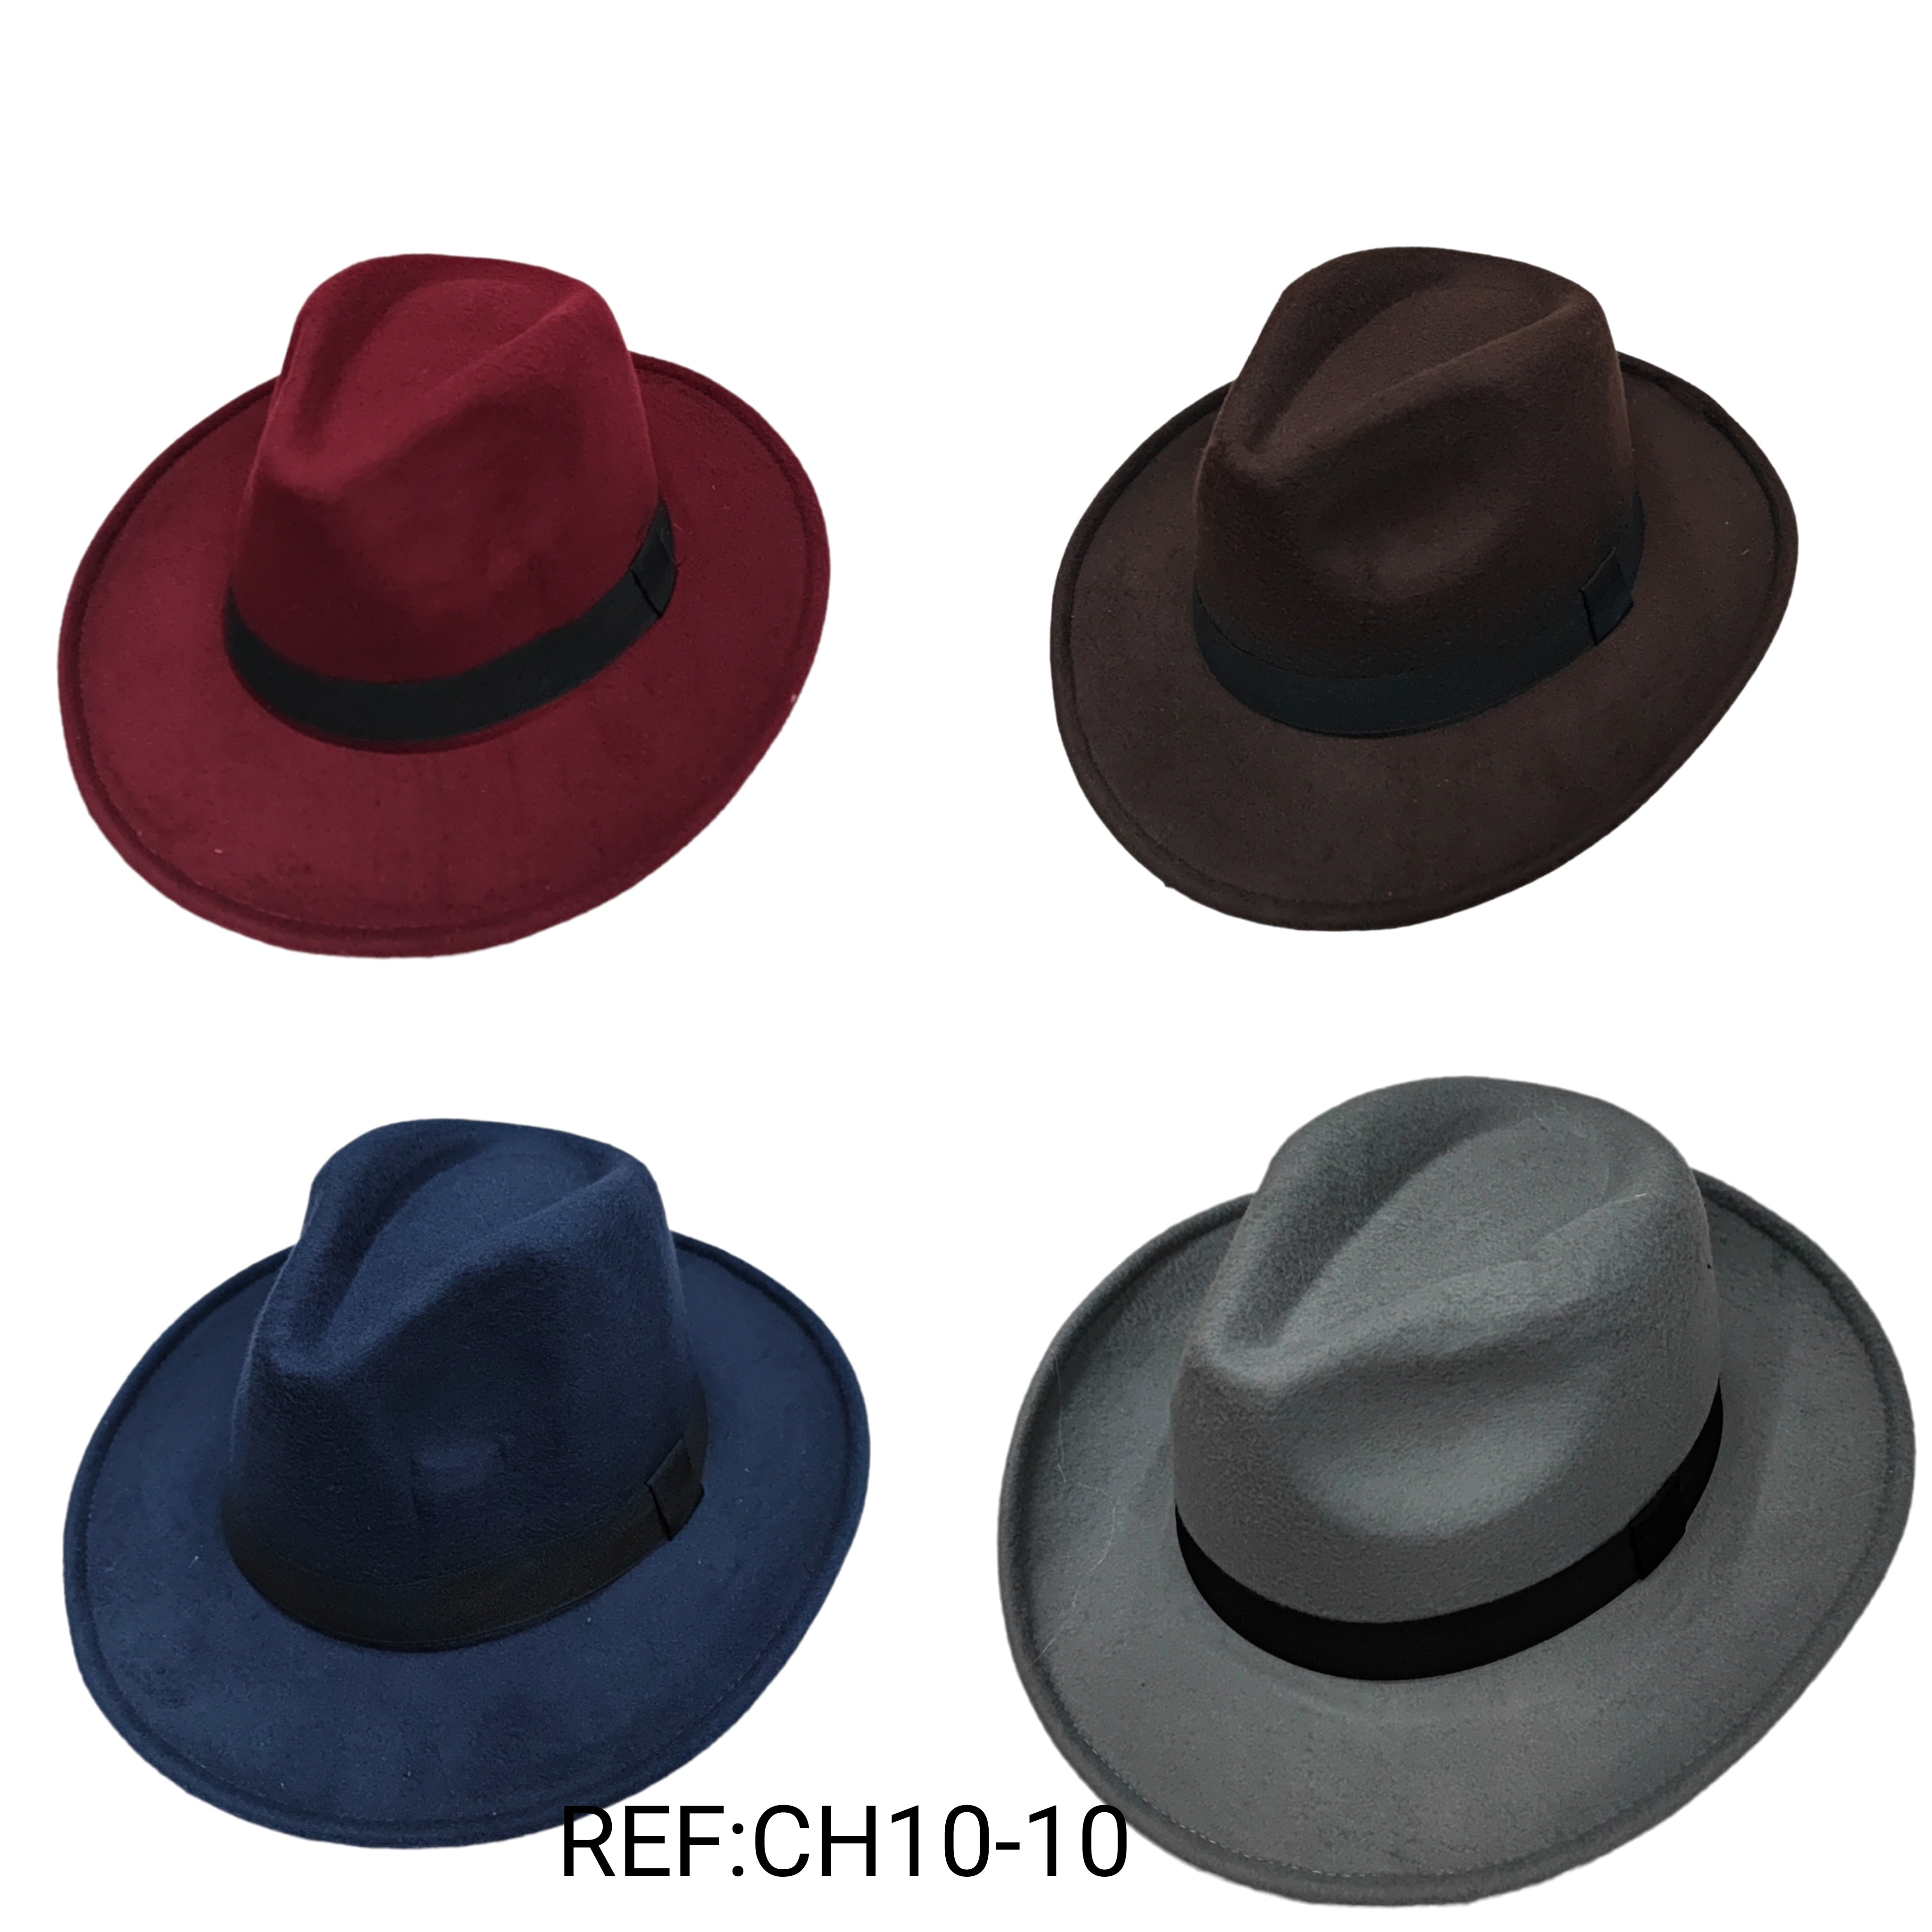 Black single band hat (x6)